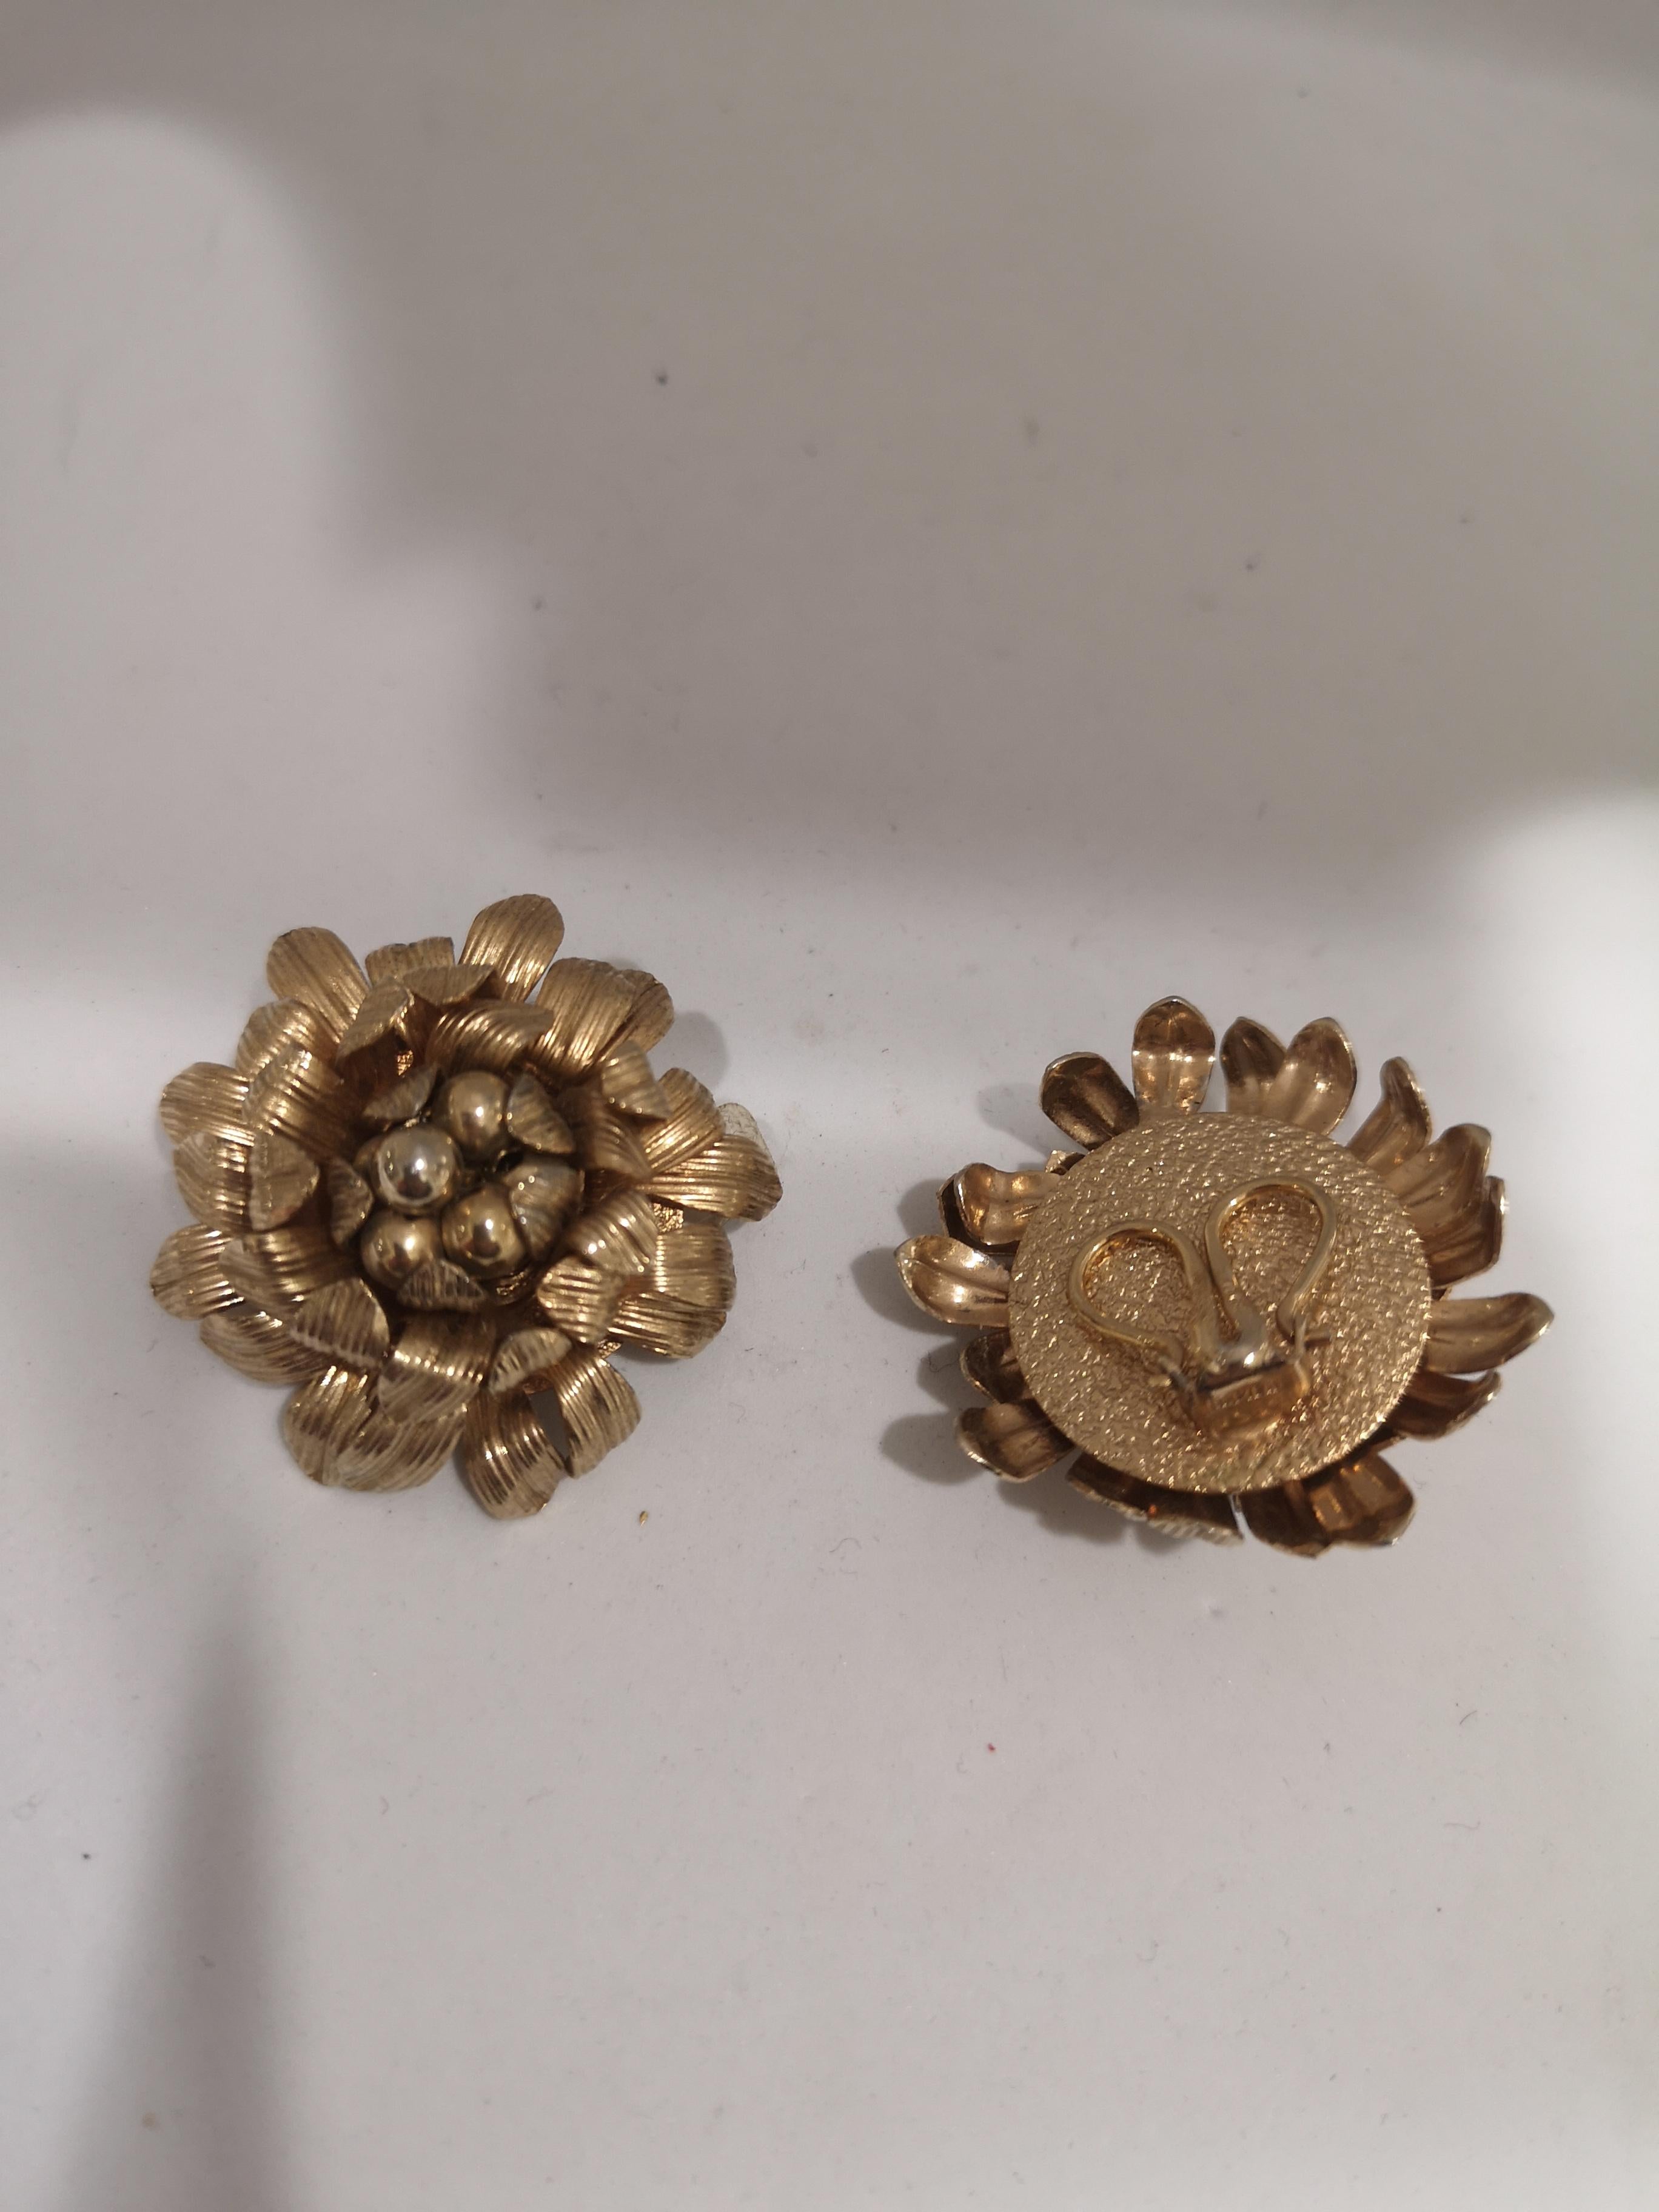 Vintage Napier gold tone flower clip on earrings
4x4cm